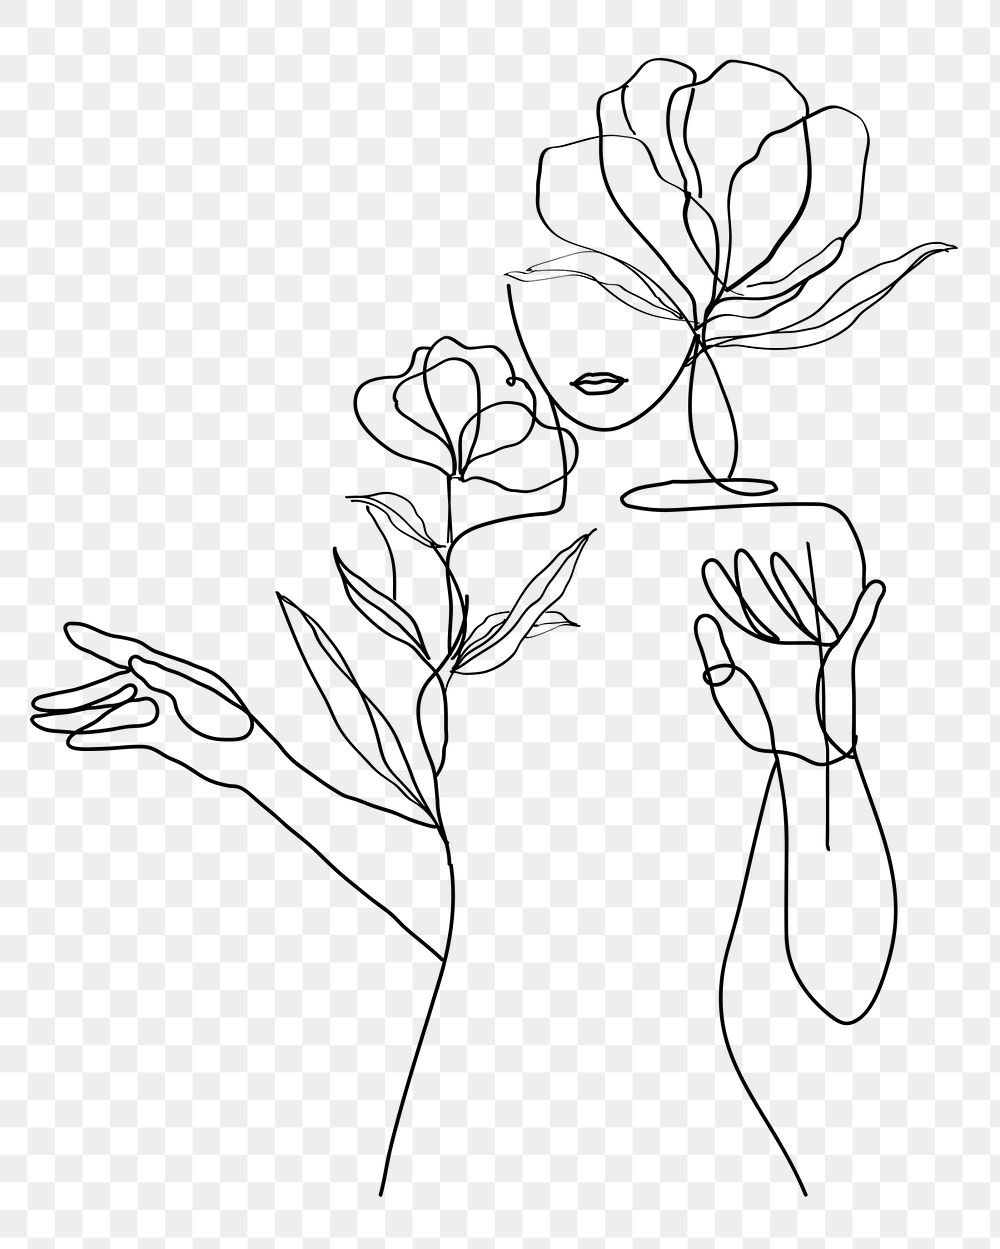 Png woman flower minimal black line art illustration